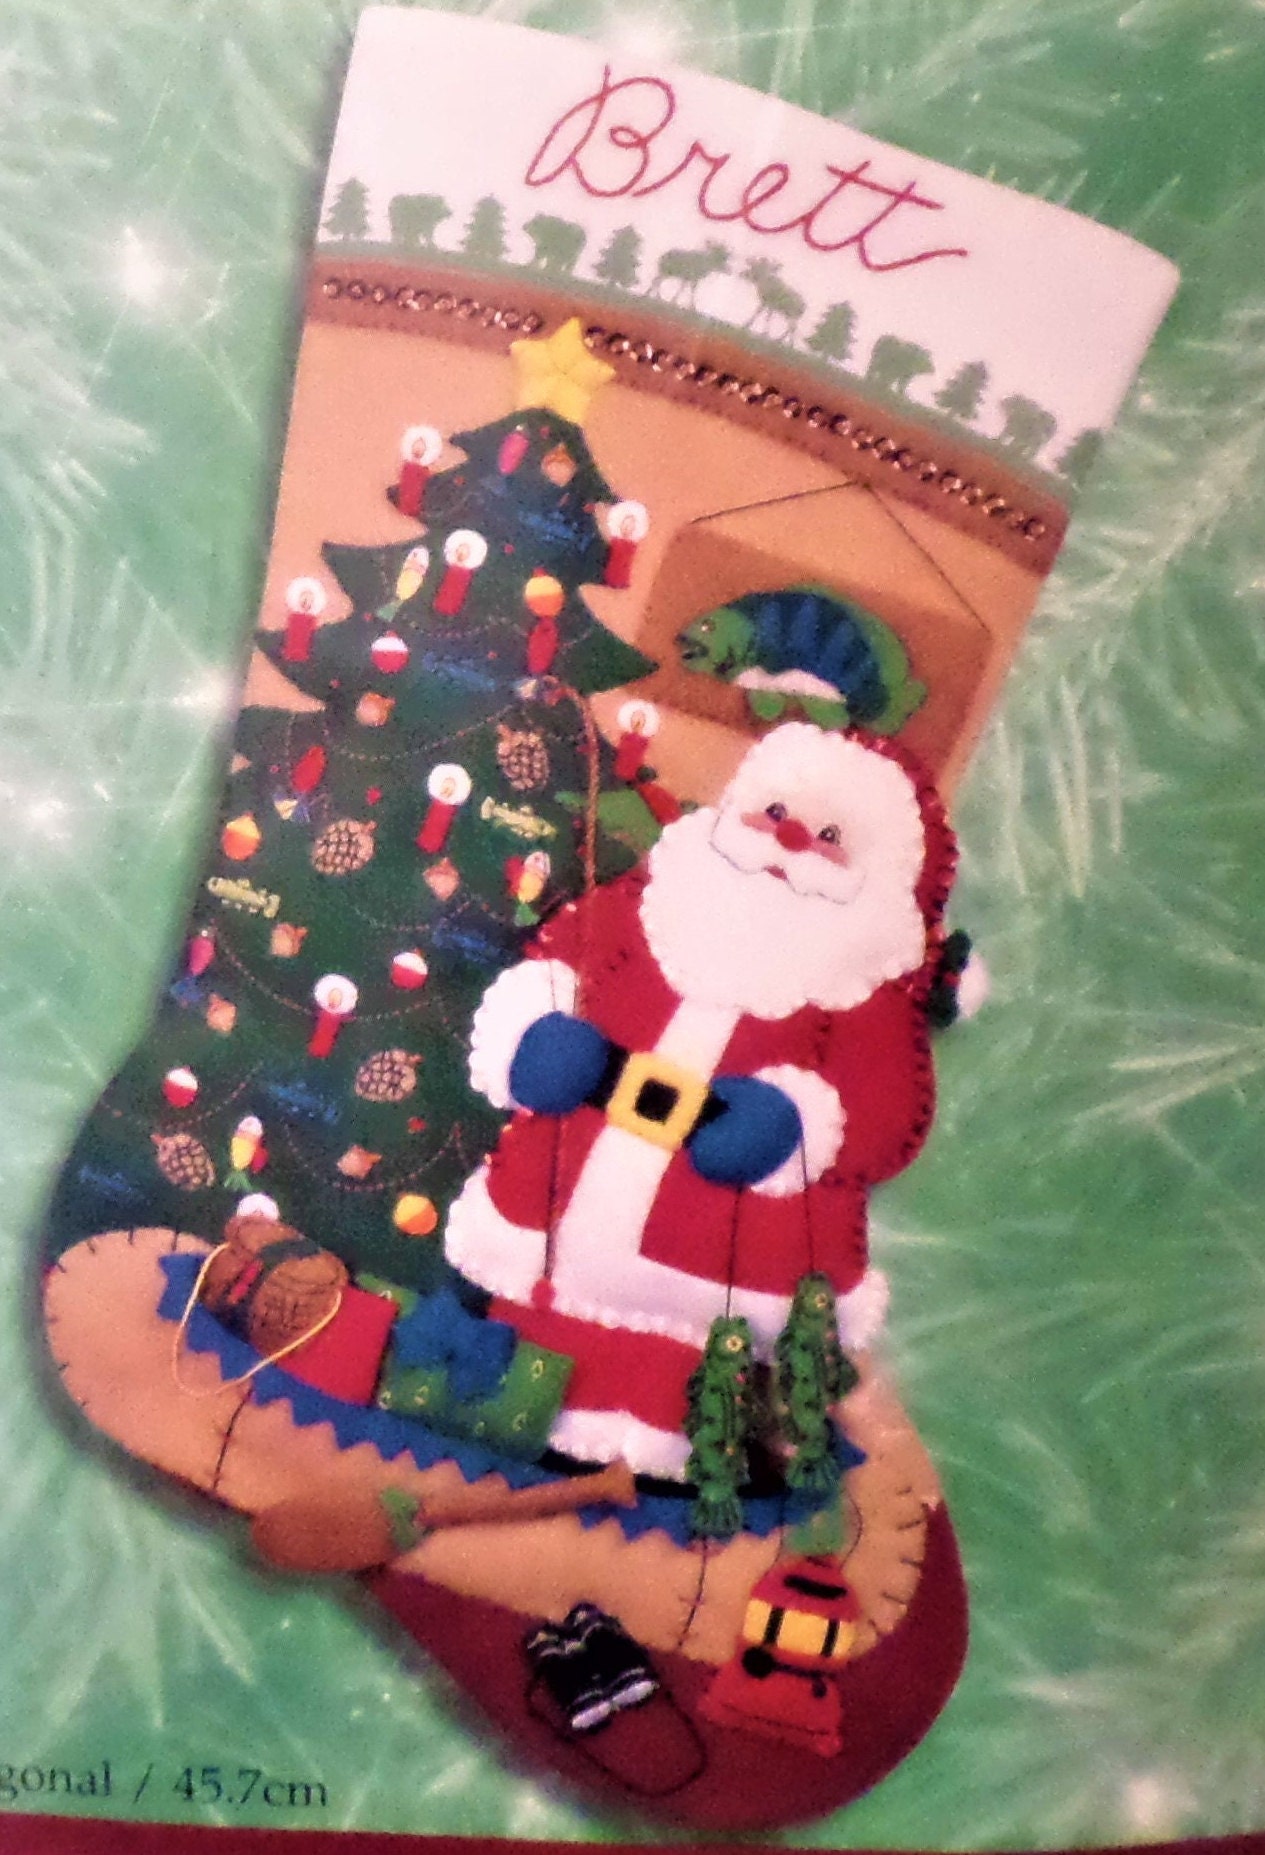 SANTA'S VISIT Bucilla Felt Jumbo Vintage Christmas Stocking Kit 19  Sterilized – Philippine Consulate General Los Angeles California